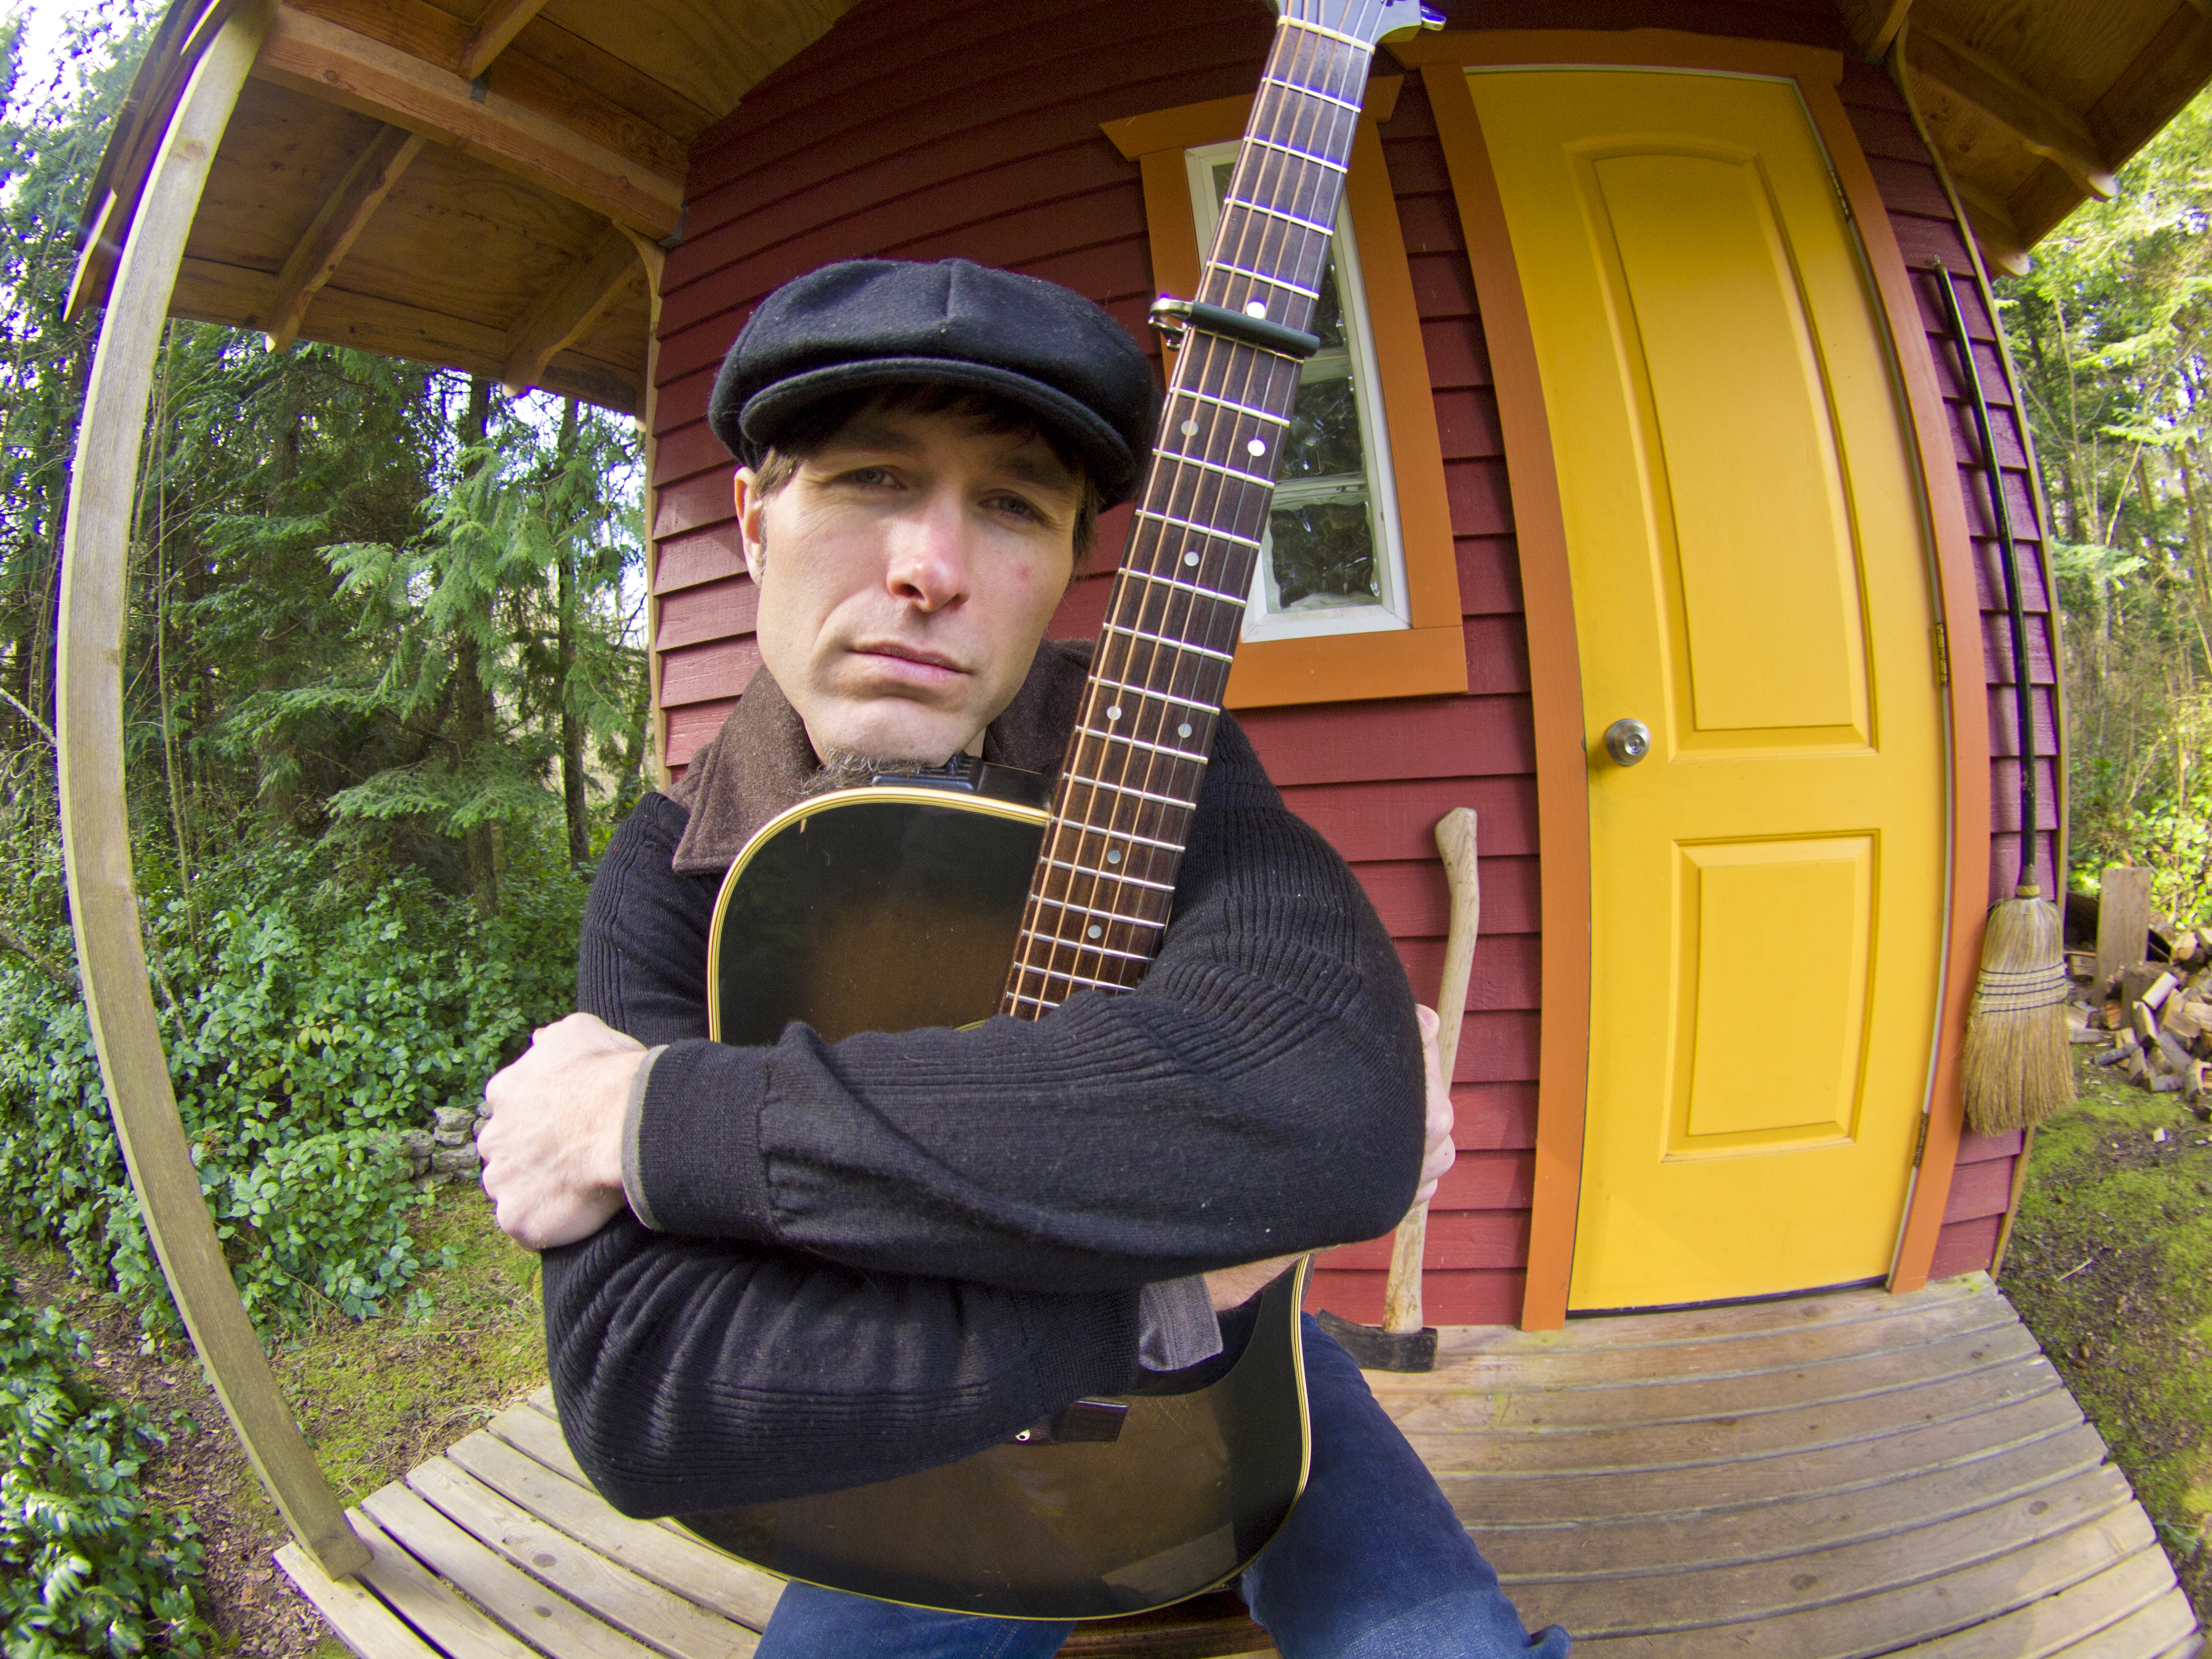 Singer Keeth Apgar on a porch holding a guitar